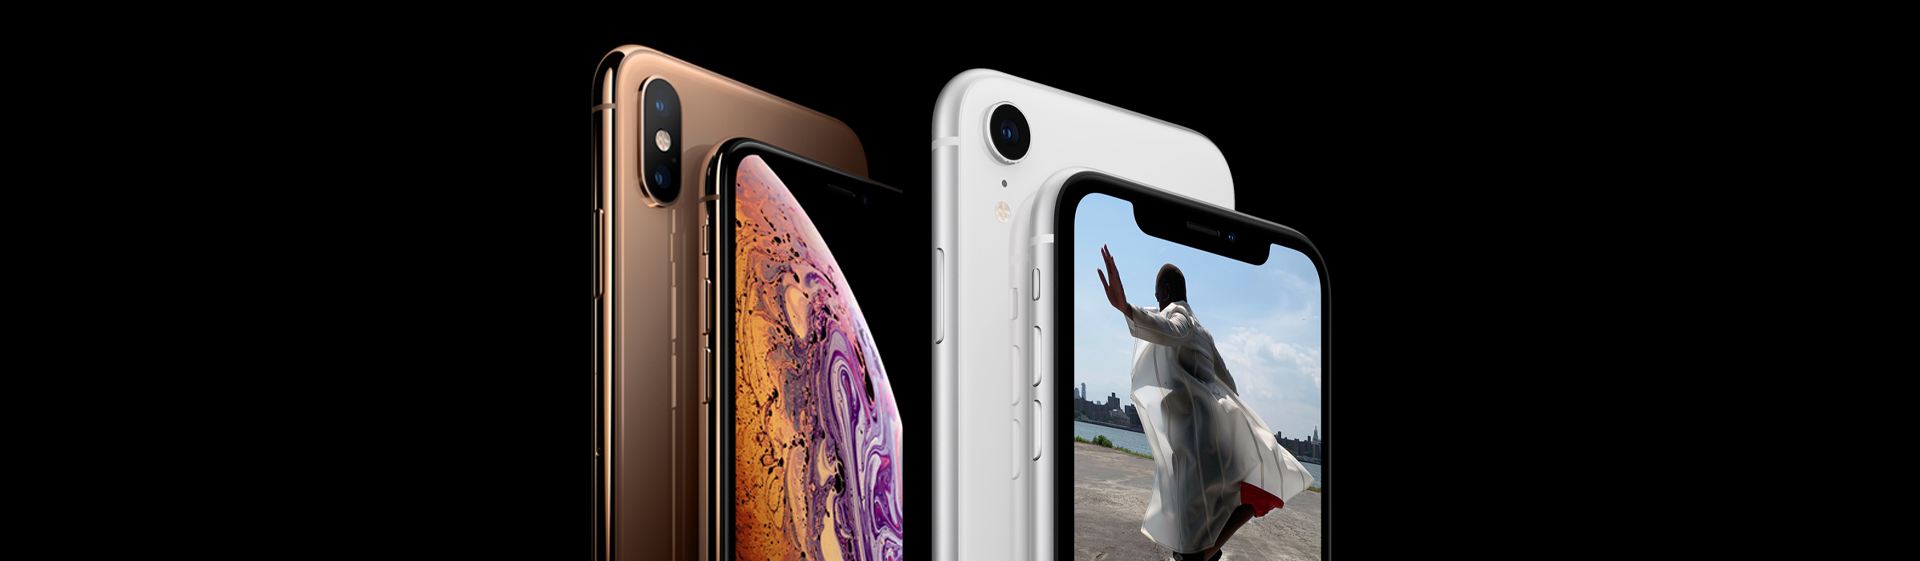 iPhone XS vs iPhone XR: veja 5 diferenças entre os celulares da Apple